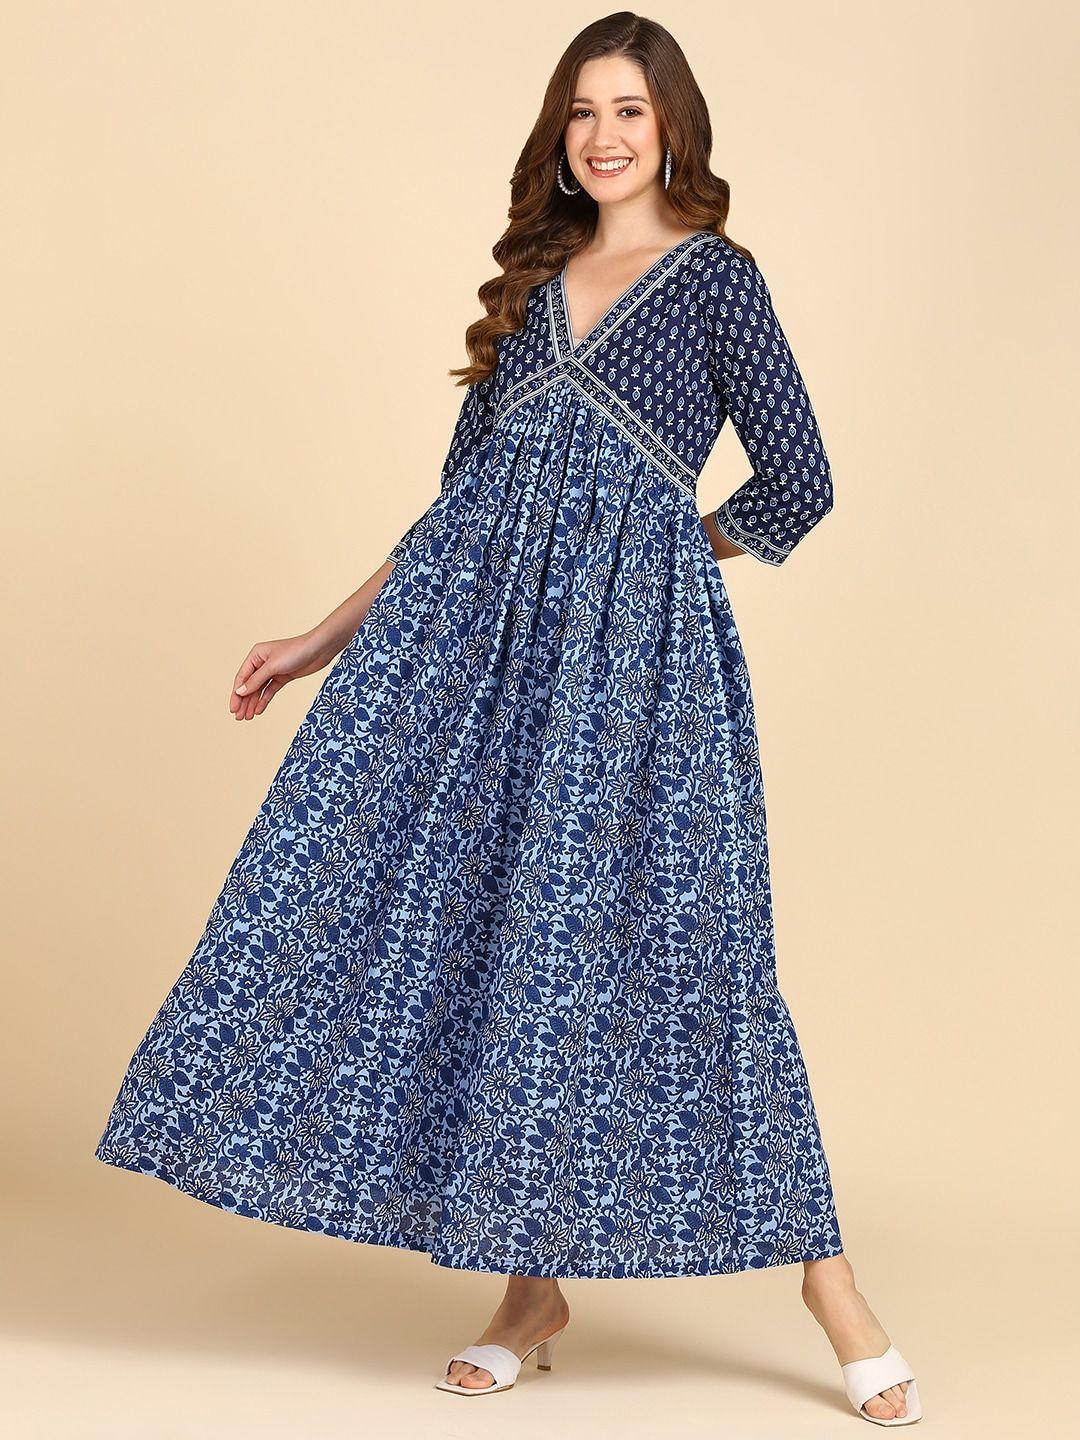 znx-clothing-blue-floral-printed-v-neck-empire-dress